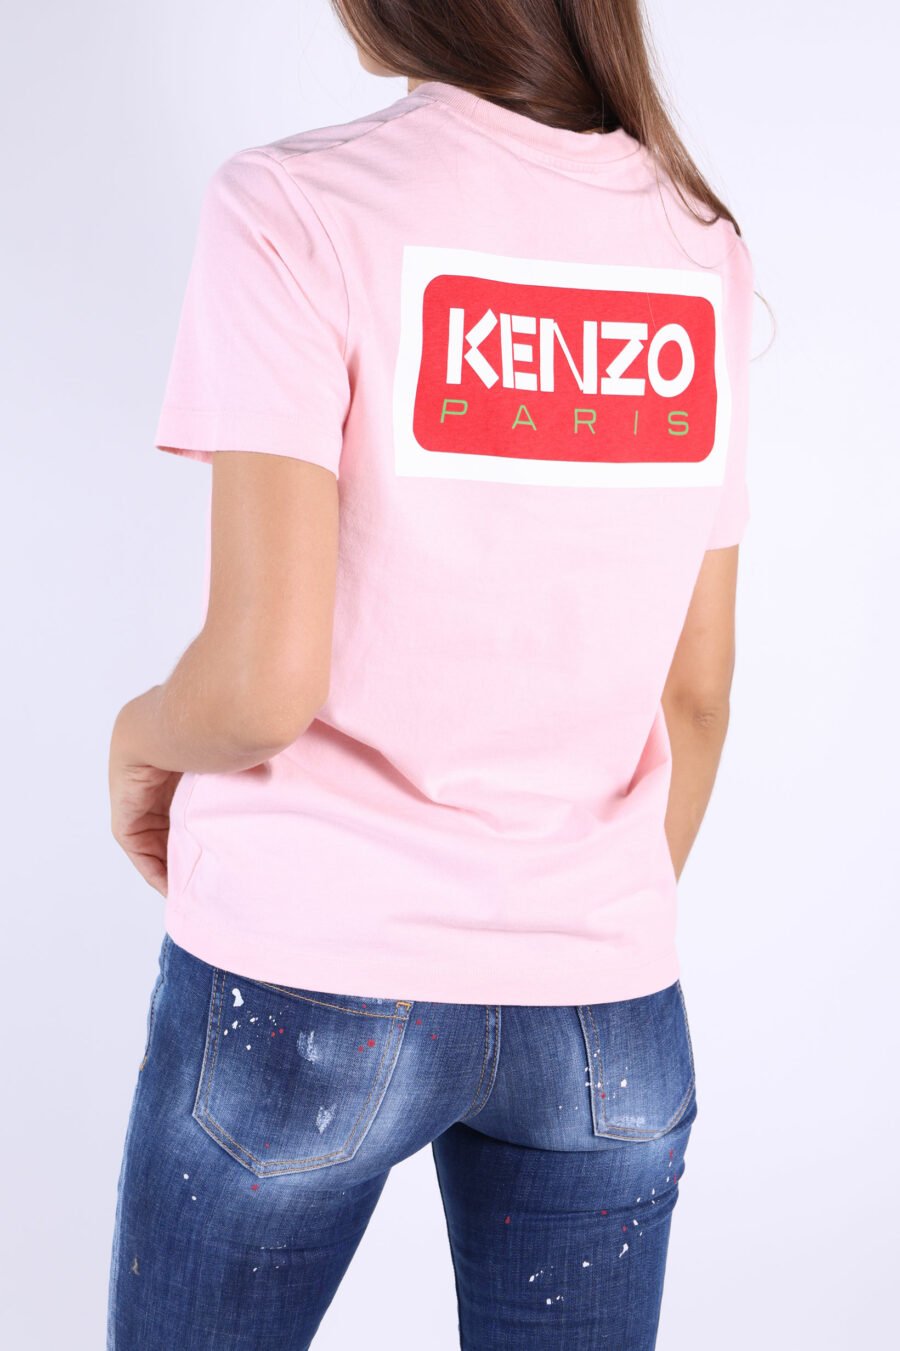 Camiseta rosa "oversize" con logo "kenzo paris" - 361223054662201908